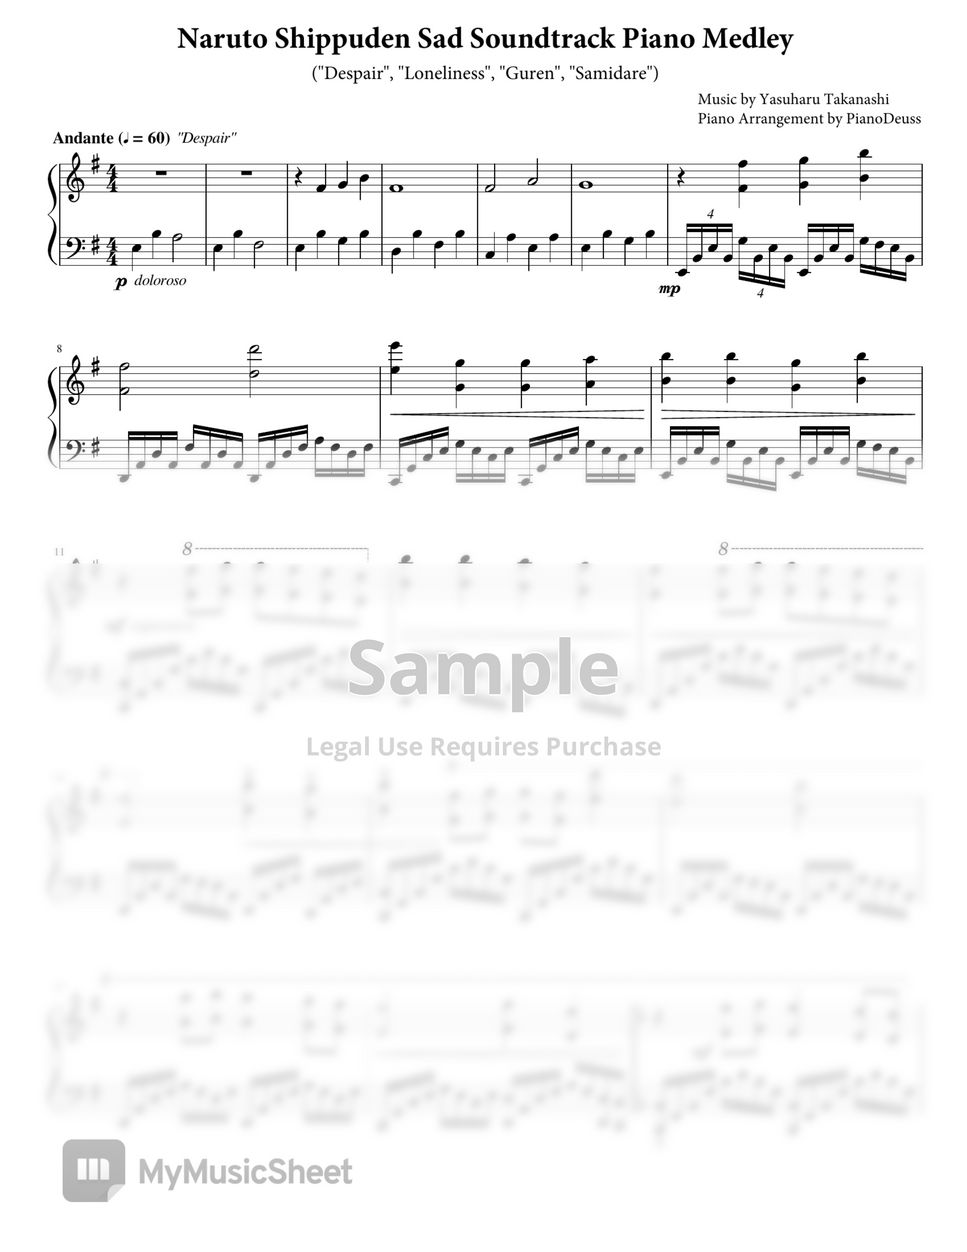 Yasuharu Takanashi - Naruto Shippuden Sad Soundtrack Piano Medley by PianoDeuss